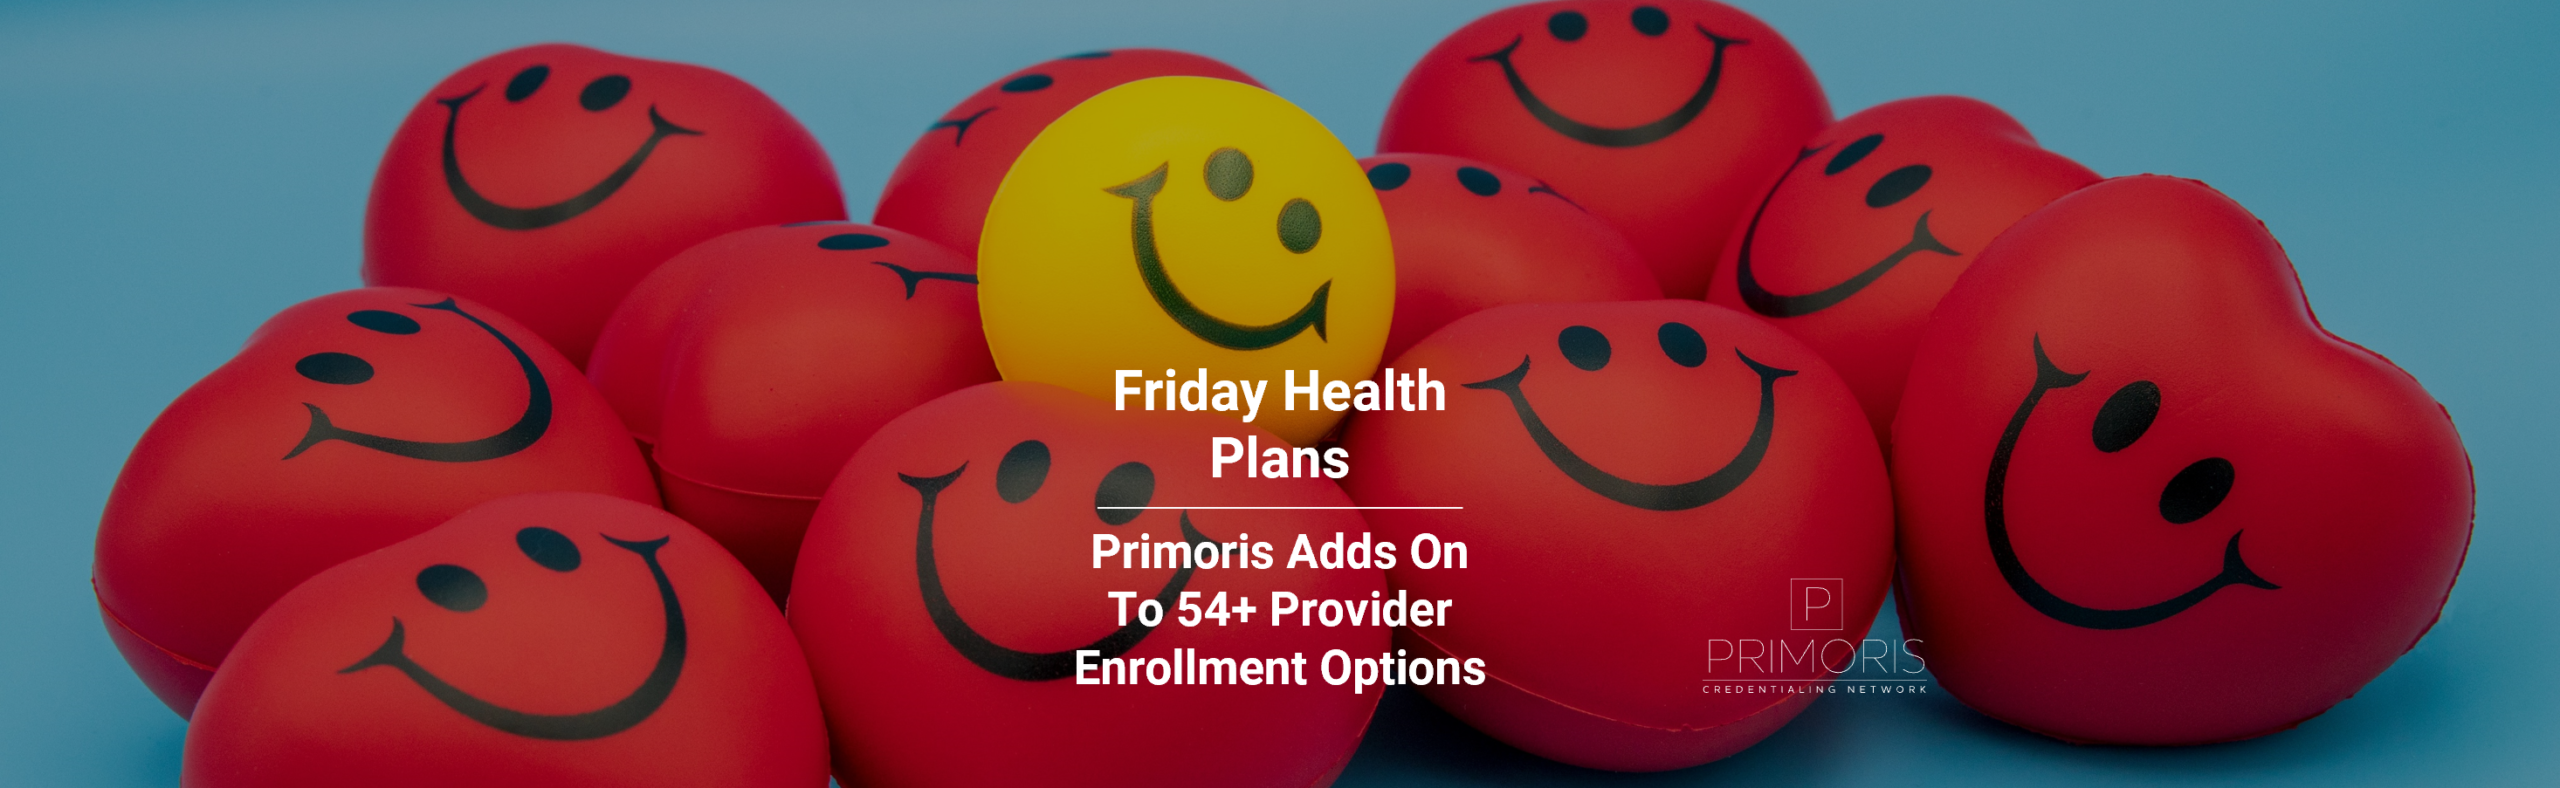 PrimorisCredentialingNetwork.com Primoris Grows Adding Friday Health Plans to Payor Options